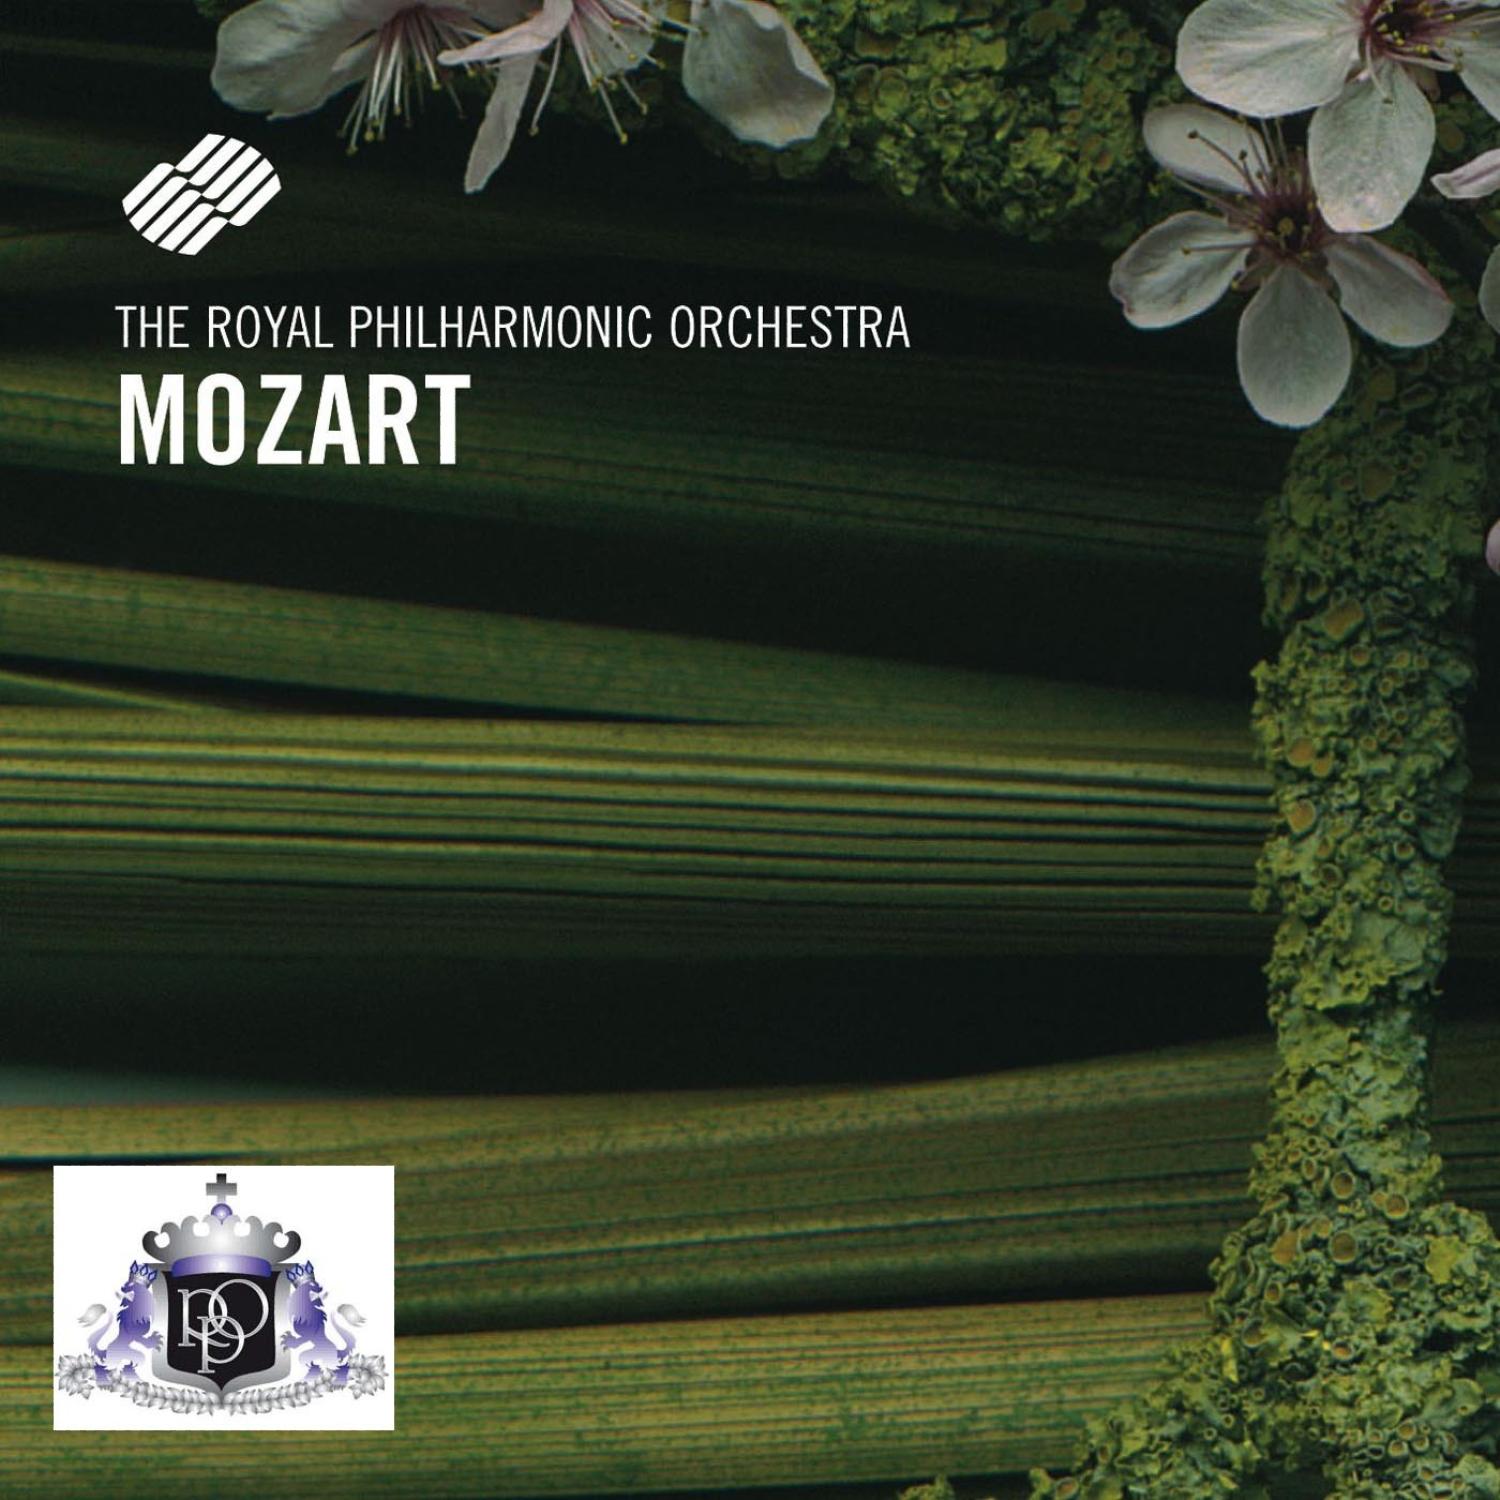 Piano Concerto No. 21 In C Major, Kv 468: Die Zauberfl te The Magic Flute: Overture